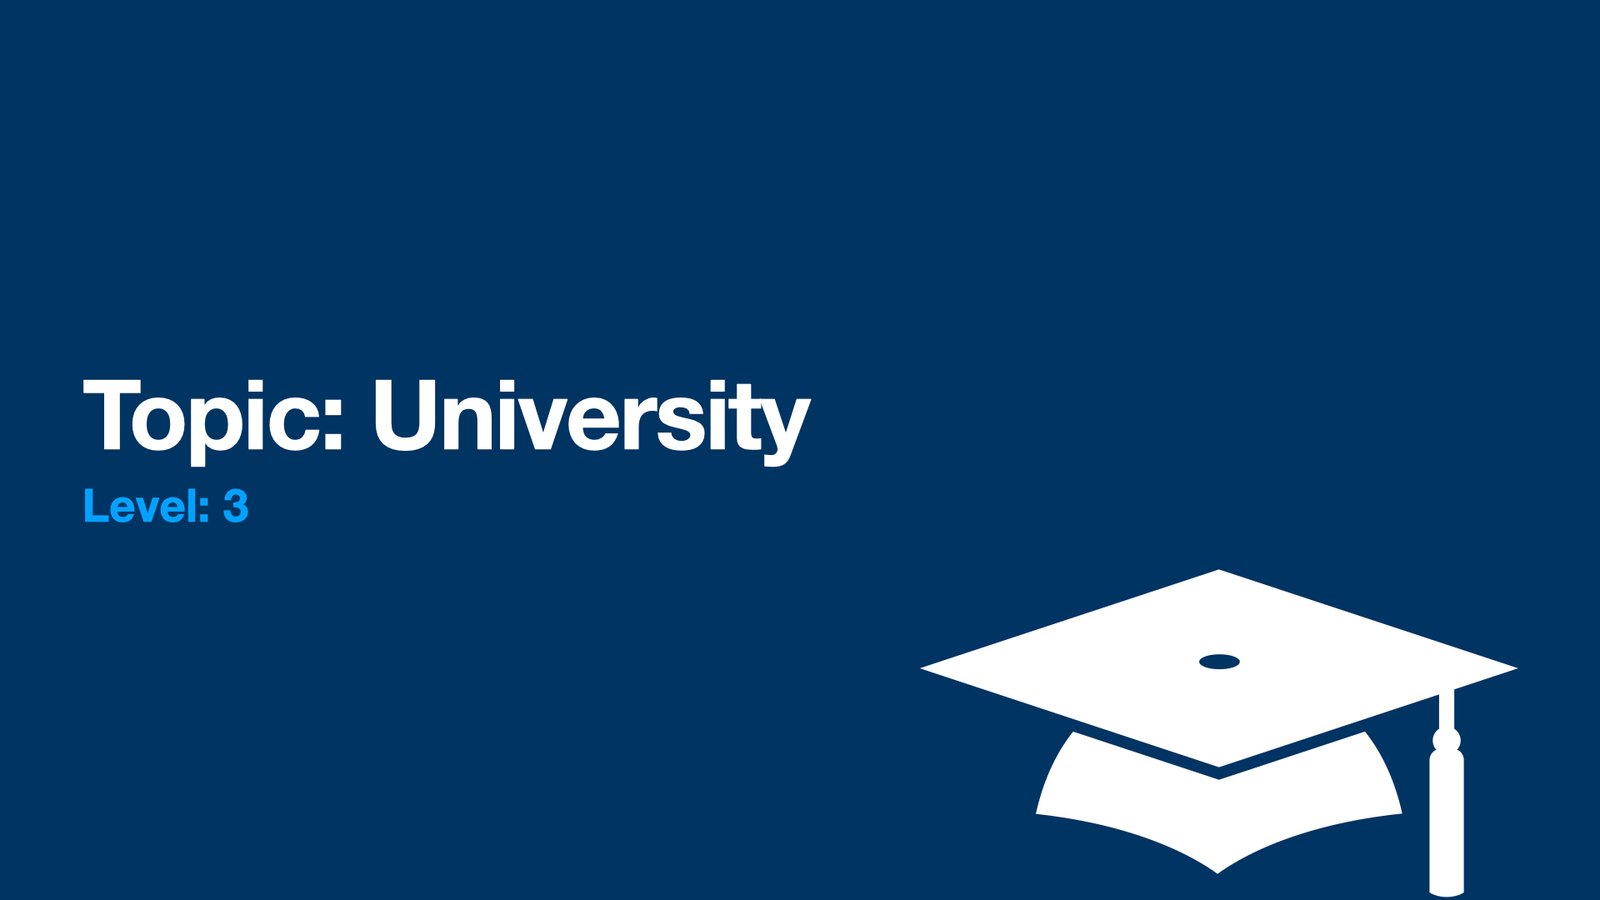 University education topic with graduation cap icon, Level 3